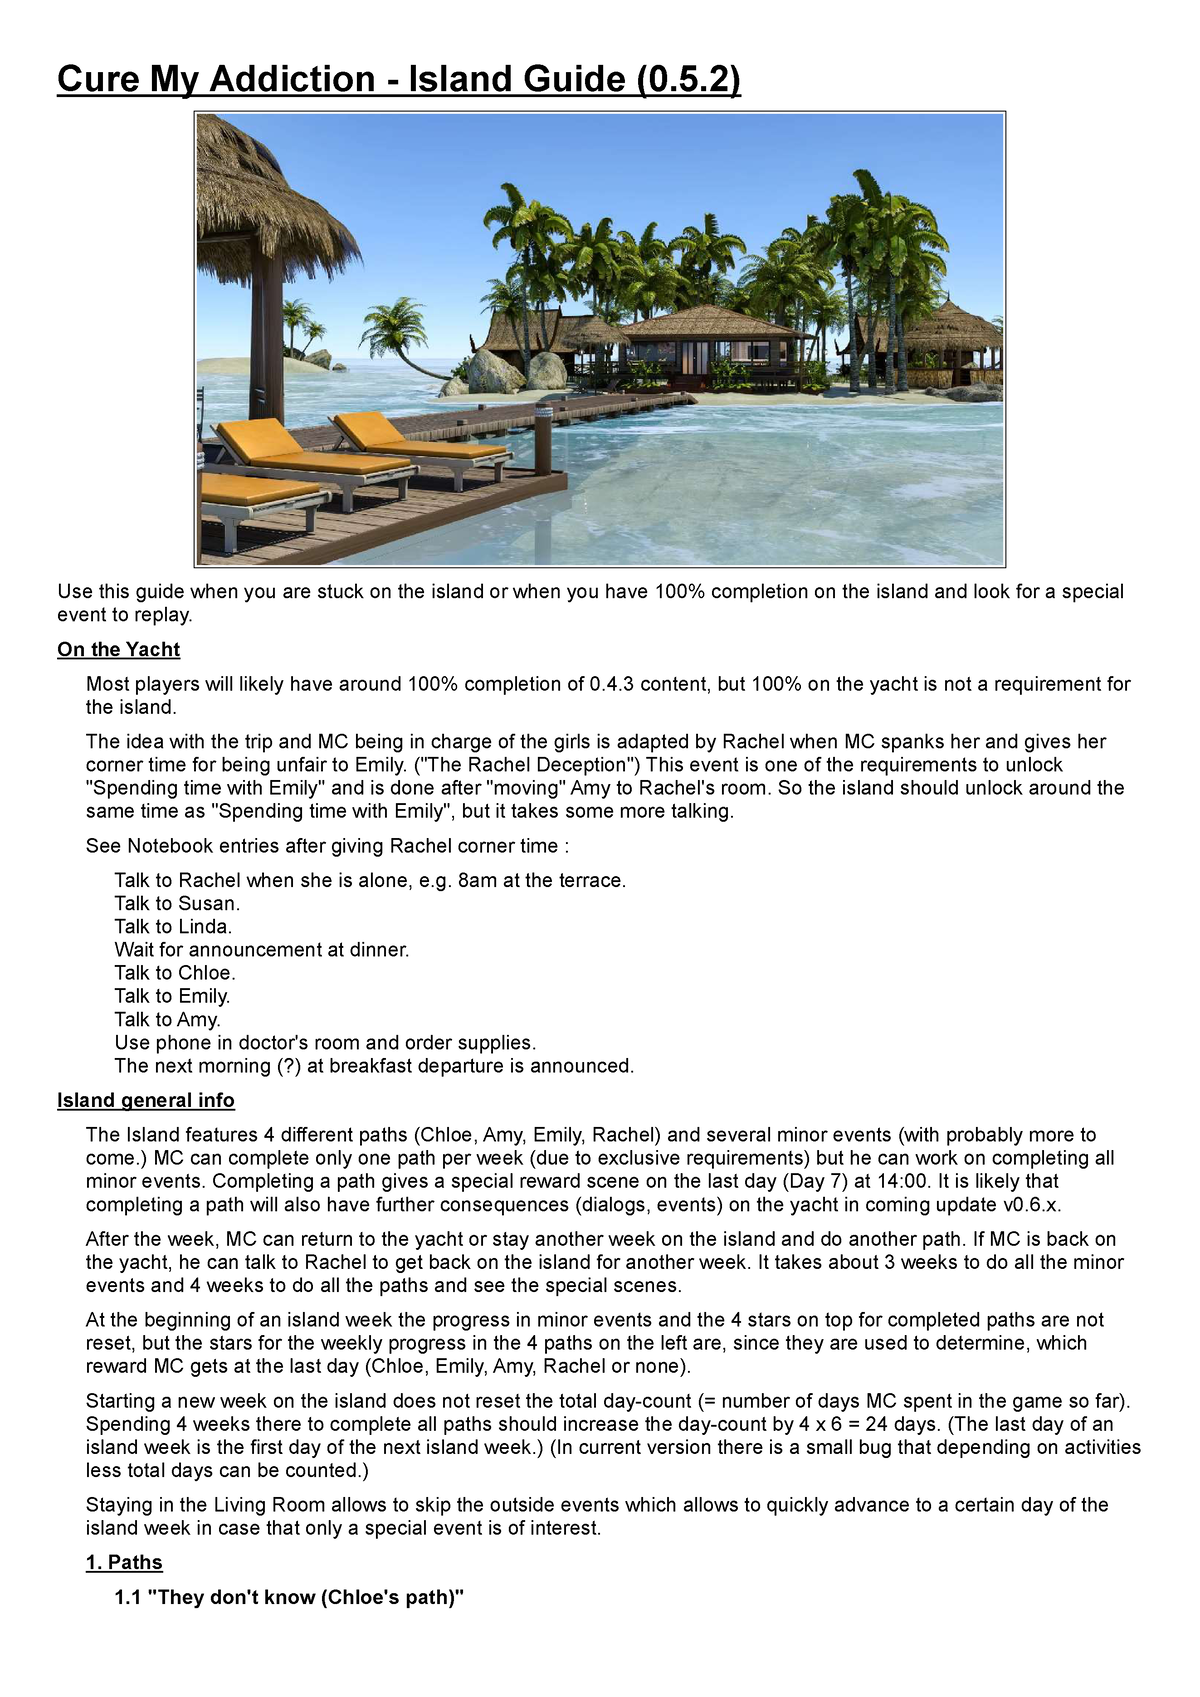 Cure My Addiction Island Guide 052 Cu Re My Addiction Island Guide 0 5 Use This Guide When